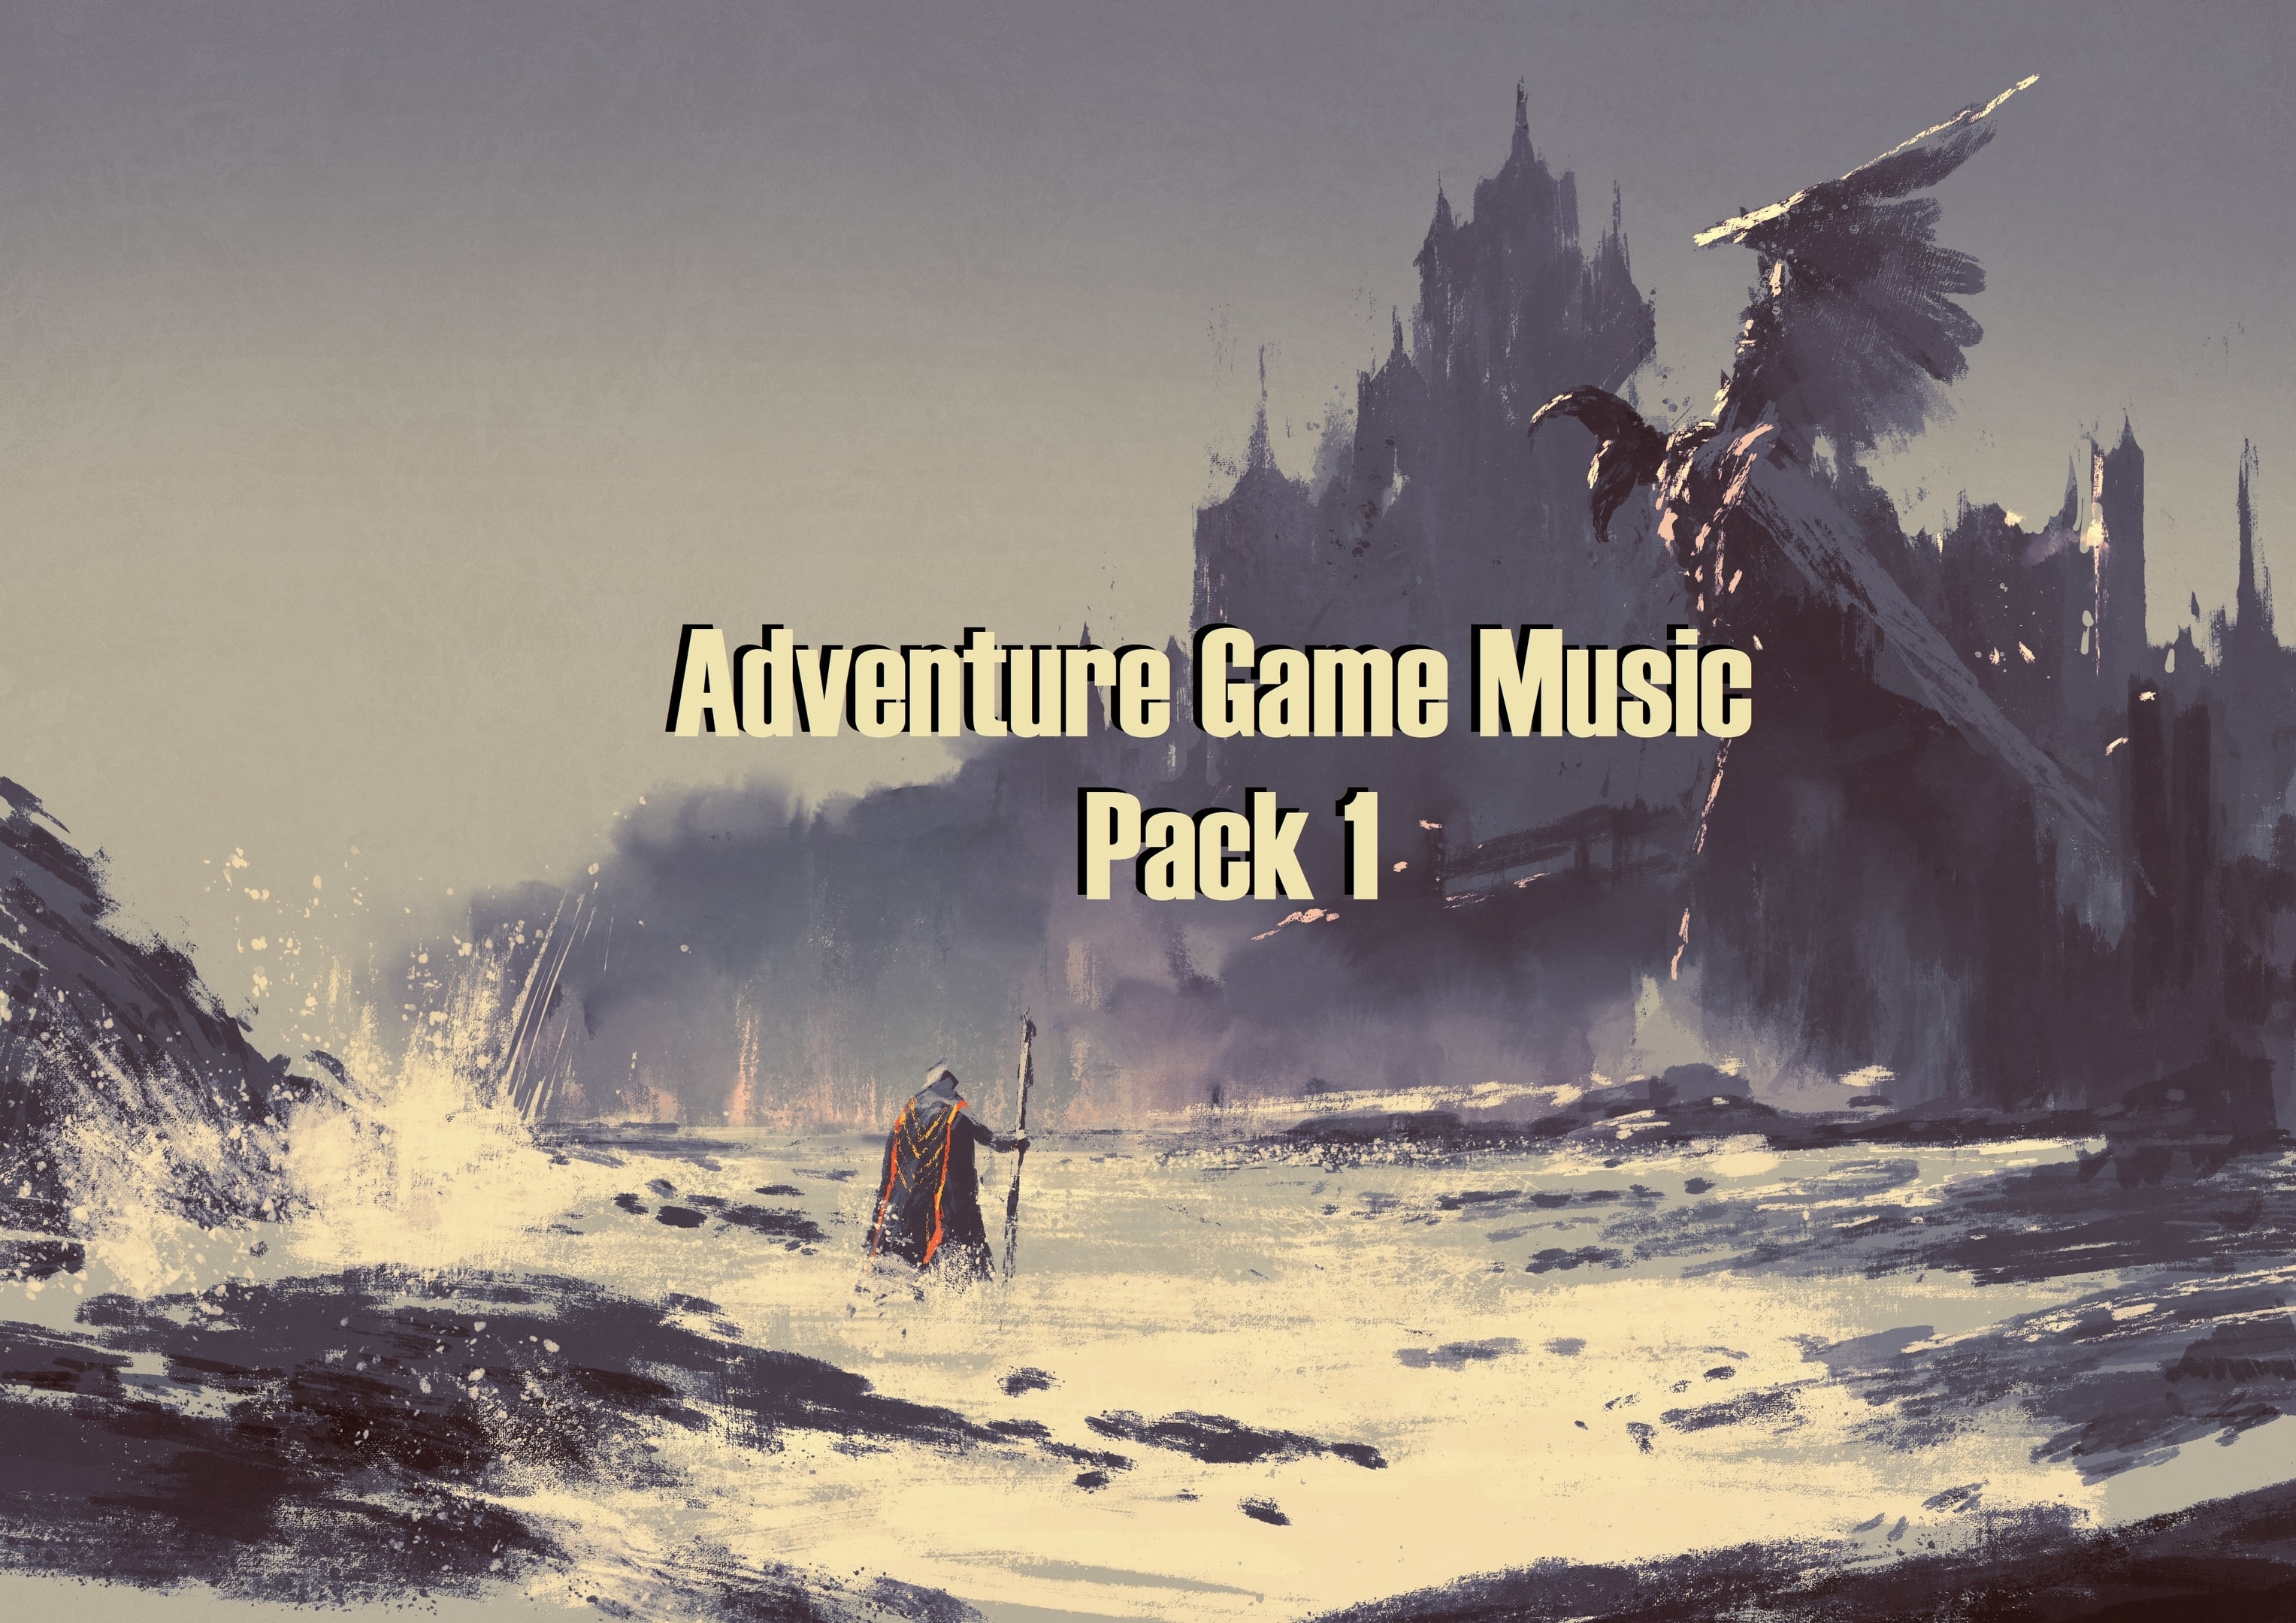 Adventure Game Music Pack 1